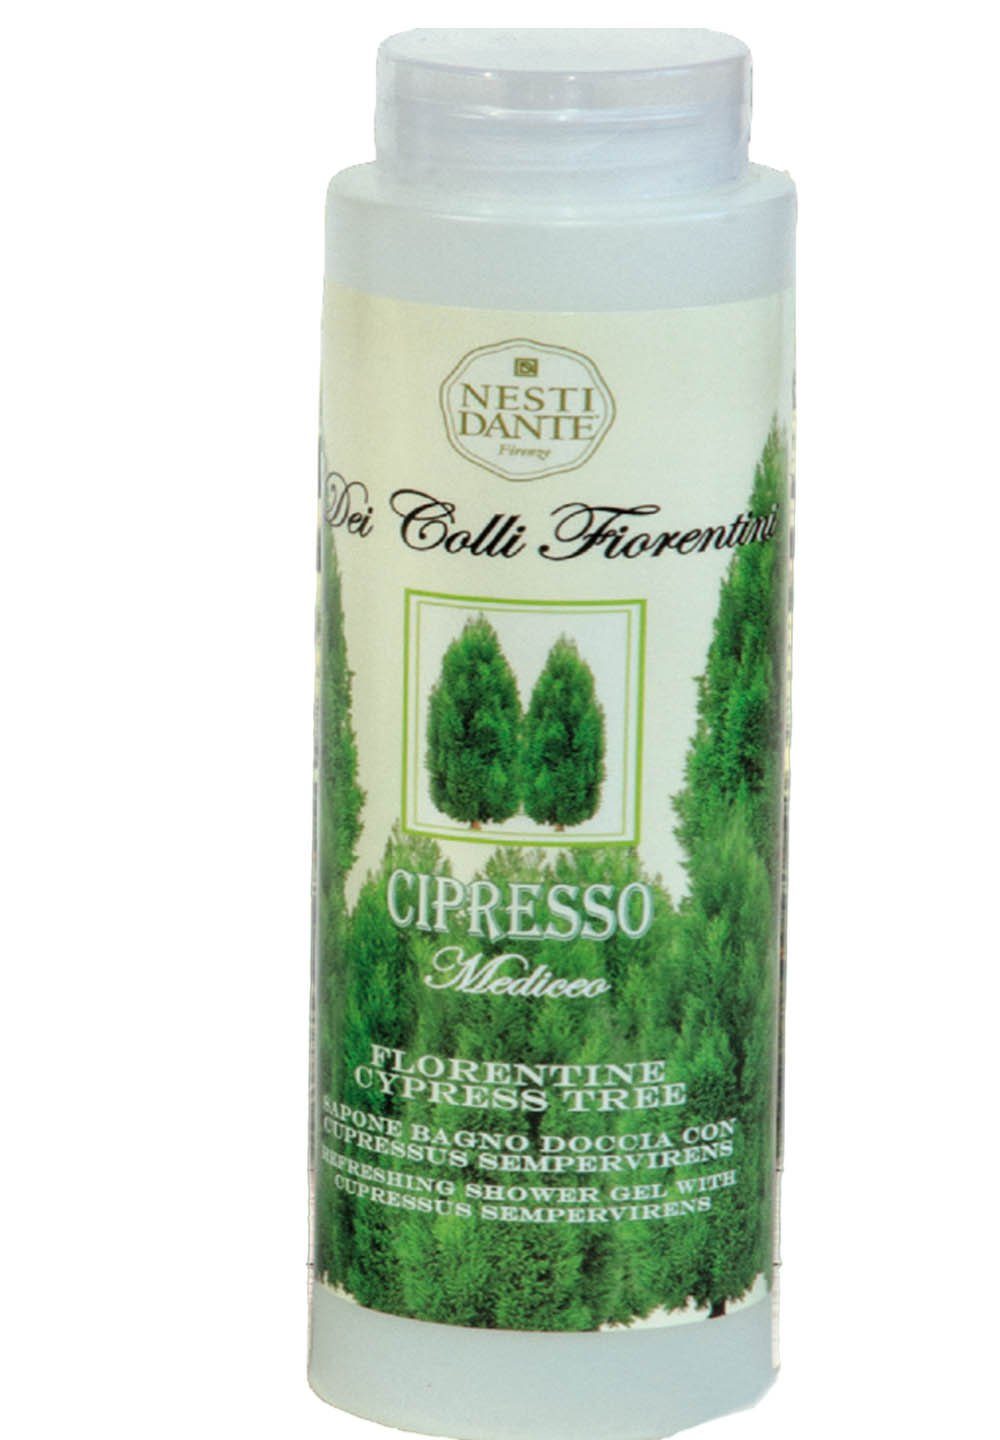 Nesti Dante Duschgel Fiorent. Cypress Tree 300 ml